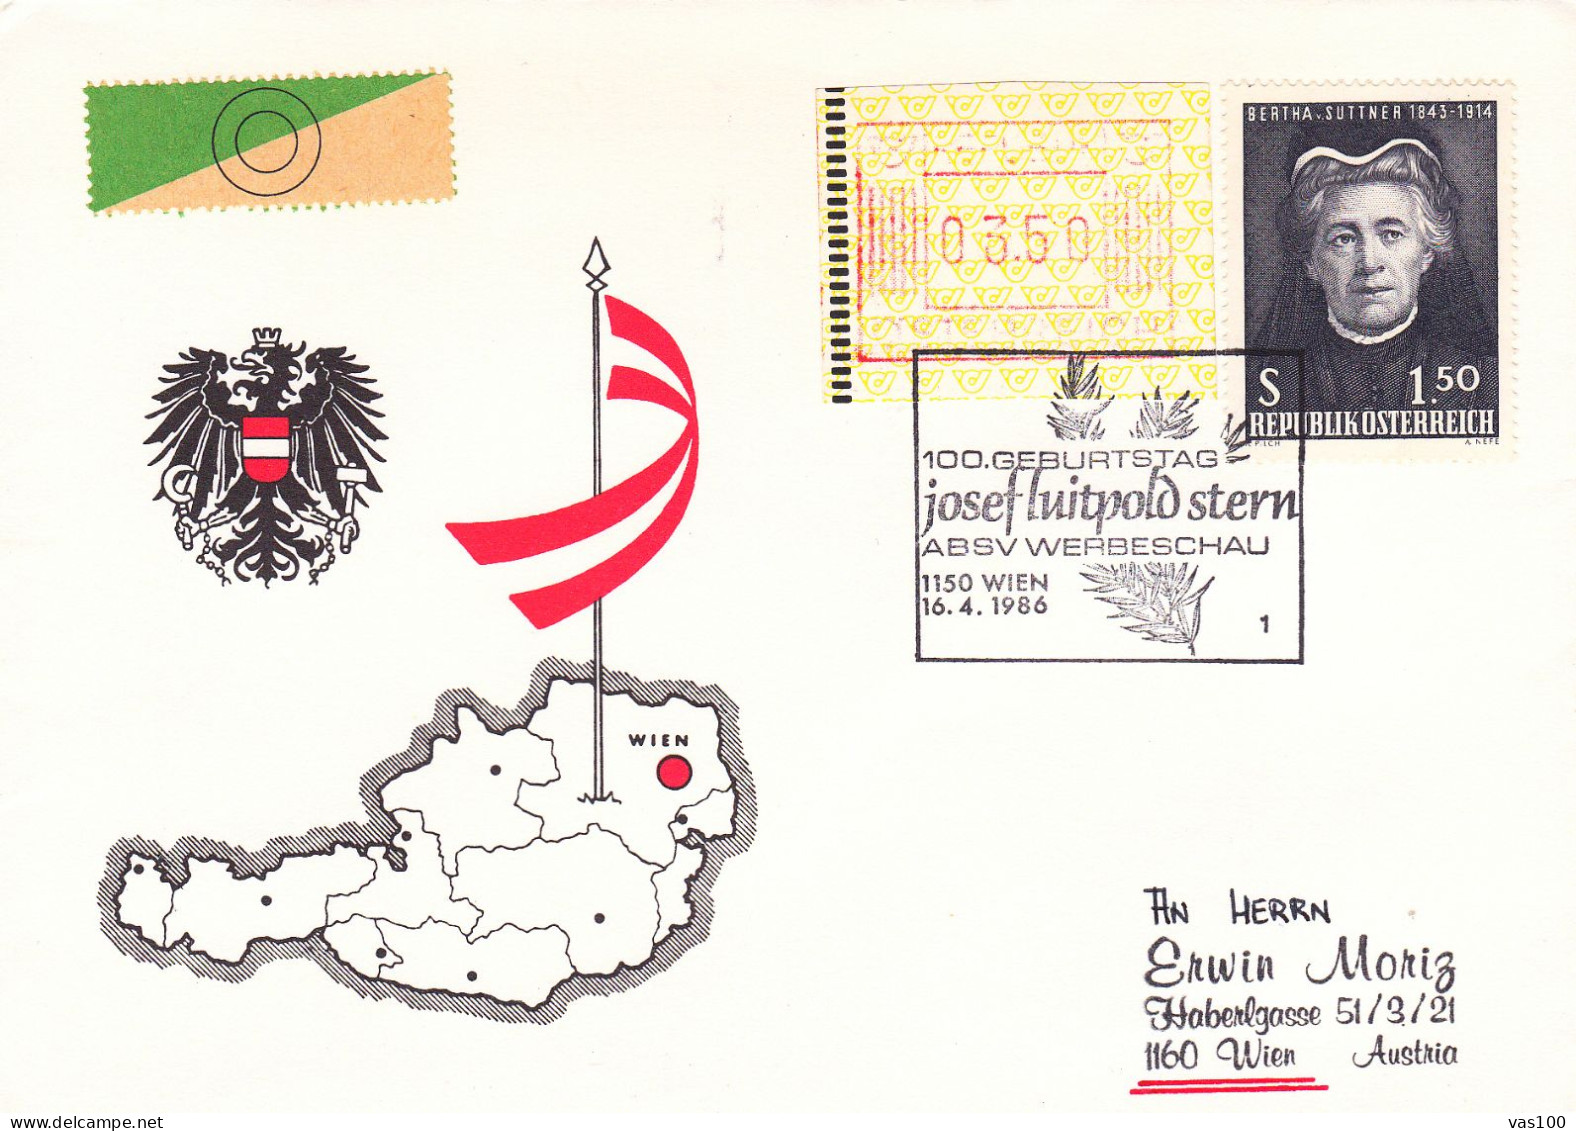 AUSTRIA POSTAL HISTORY / ABSV WERBESCHAU, 16.04.1986 - Lettres & Documents